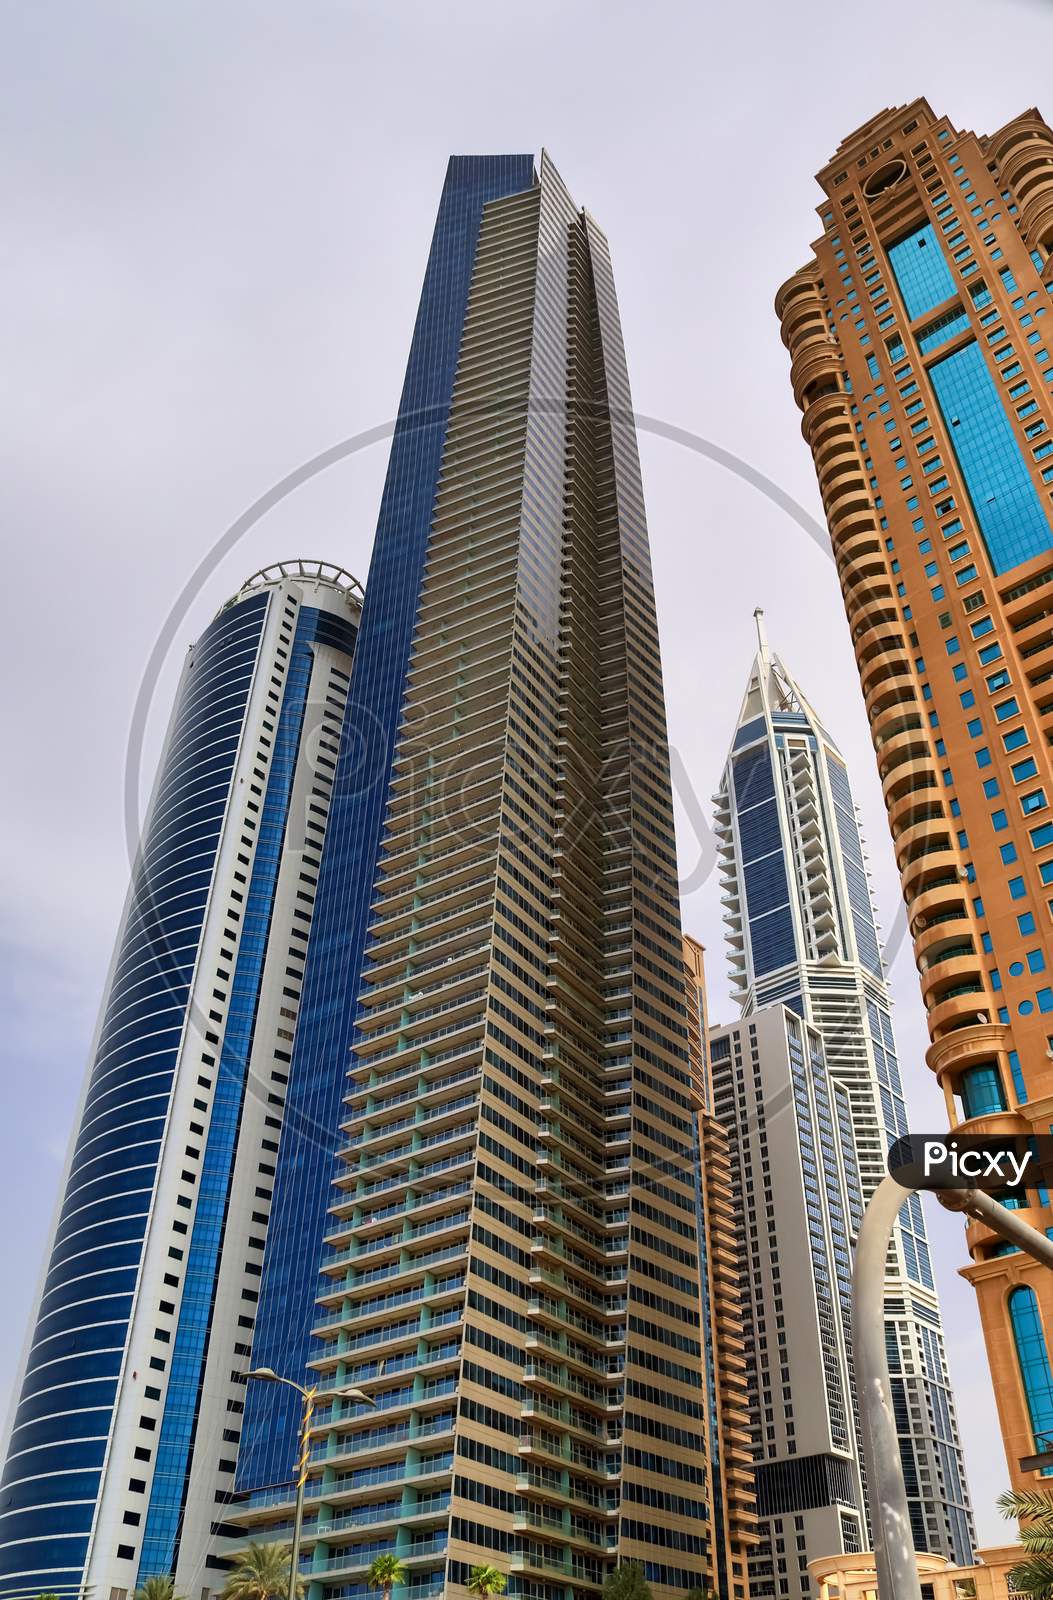 Luxury Modern Skyscrapers In The Center Of Dubai City. United Arab Emirates.